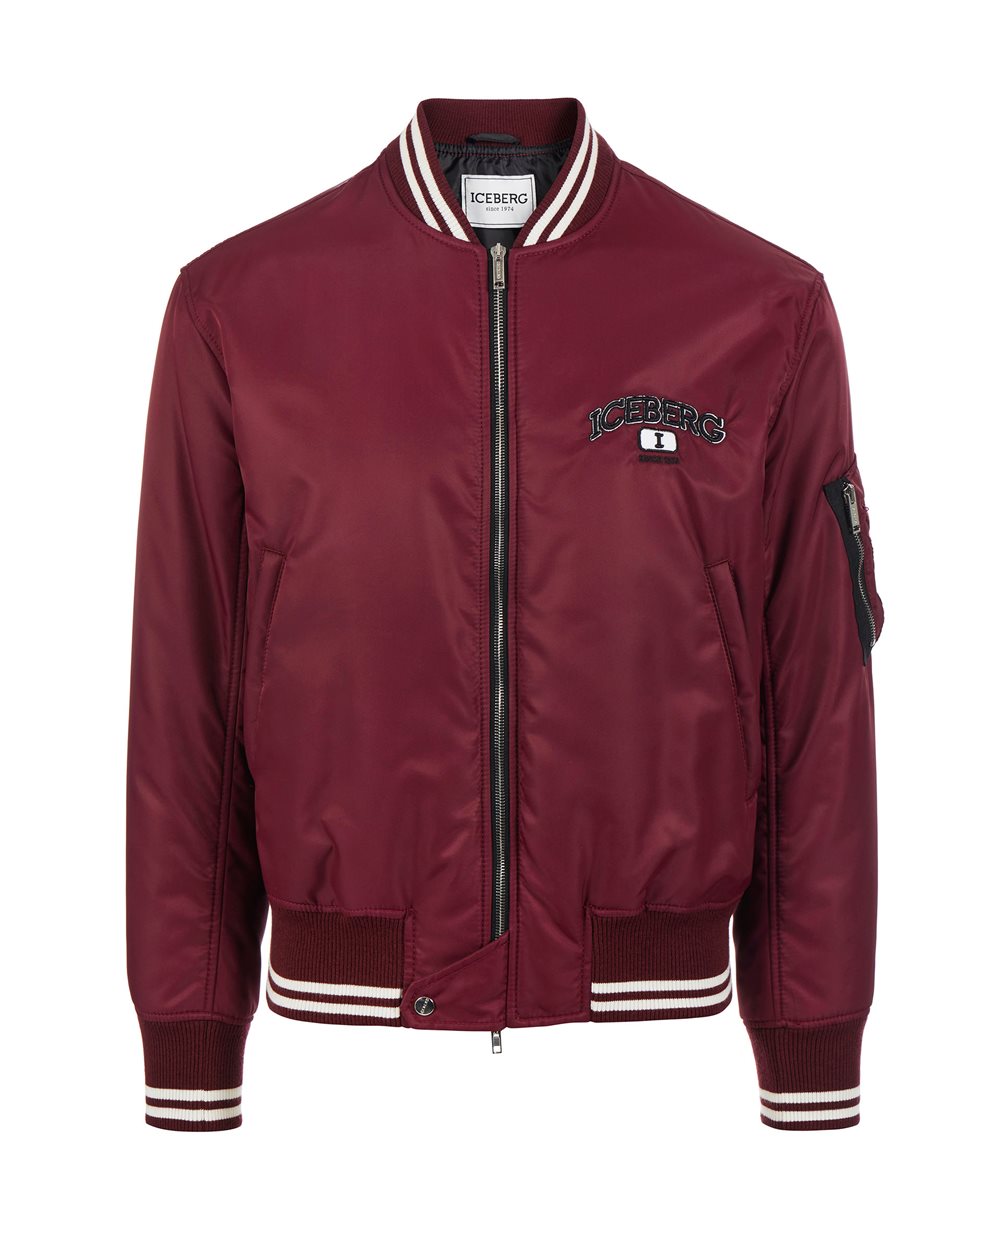 Bomber jacket with logo - PER FARE LE REGOLE | Iceberg - Official Website